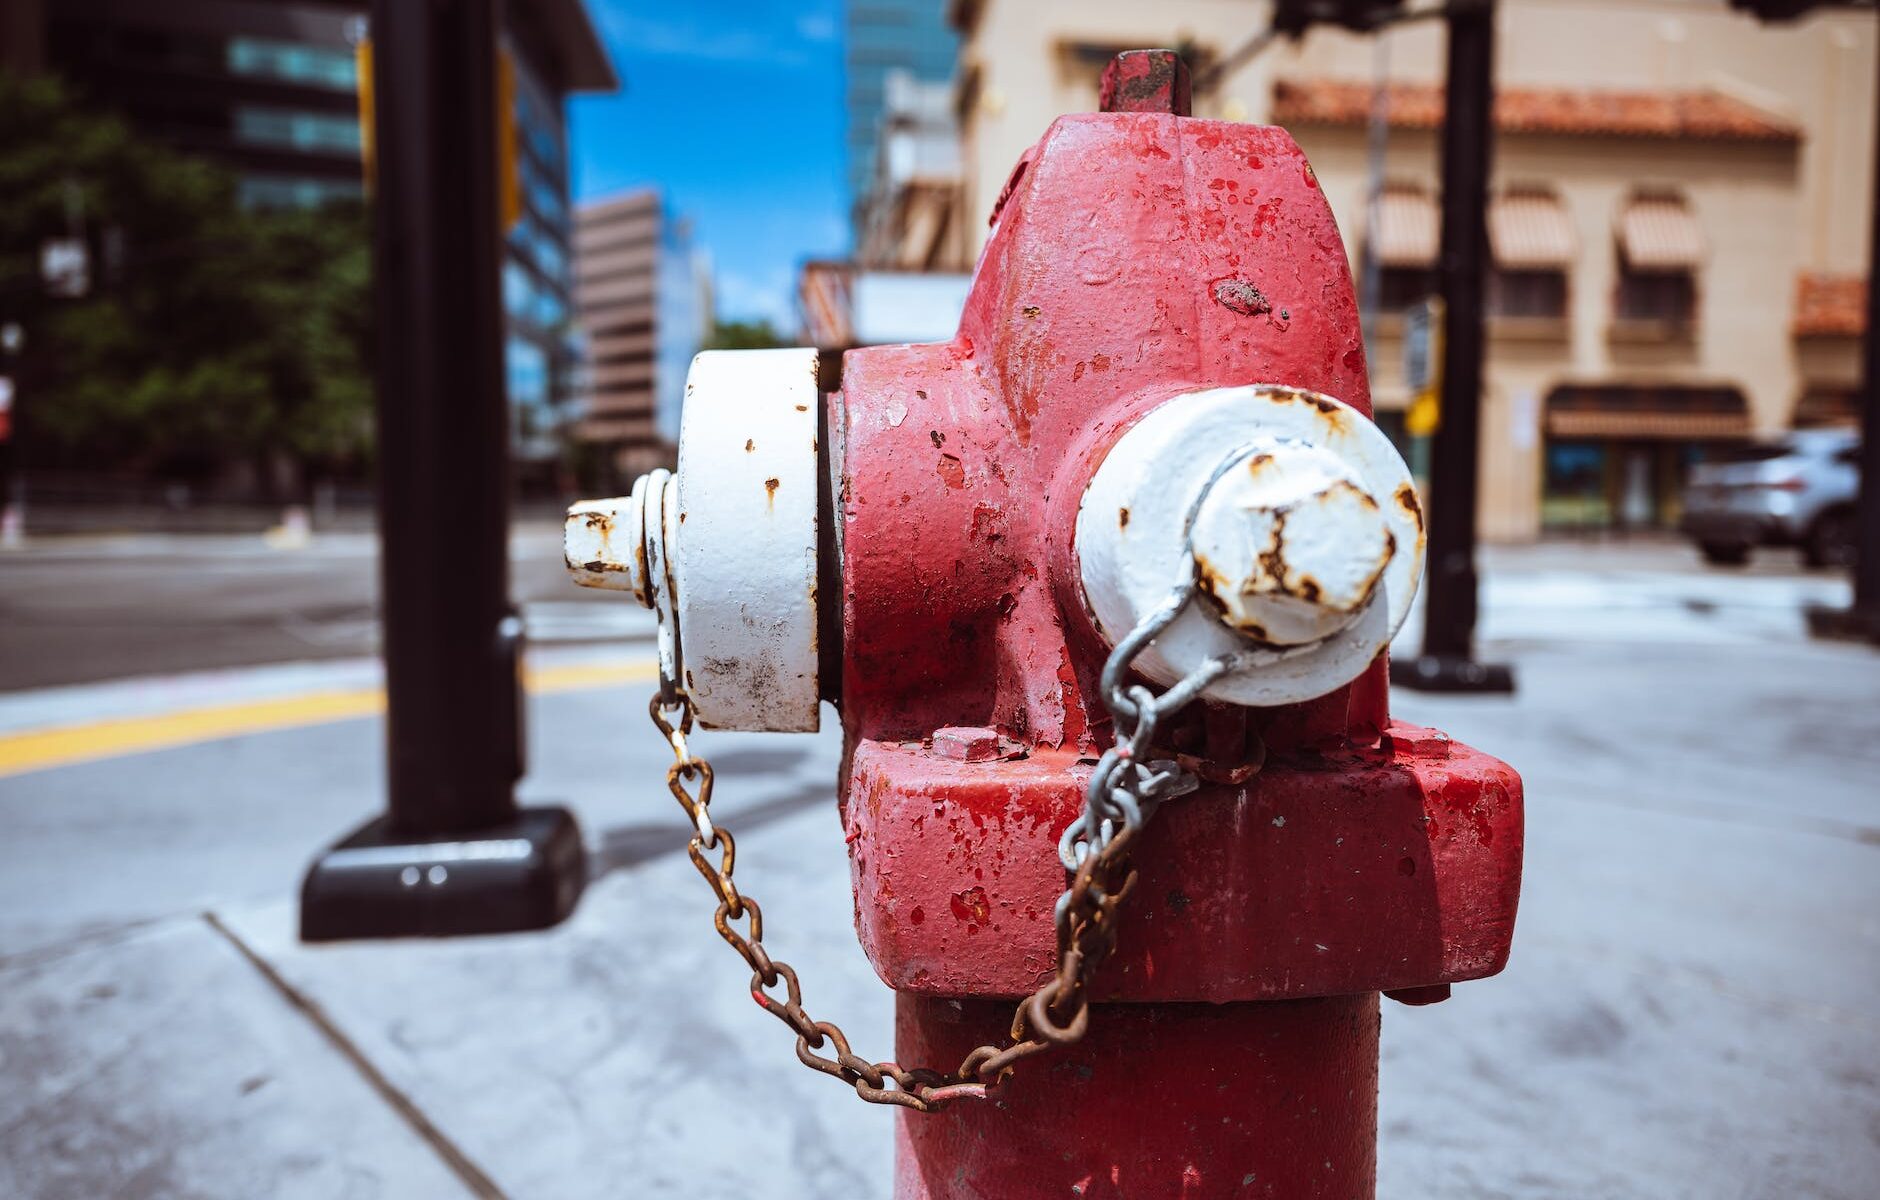 metal fire hydrant on city street against blue sky